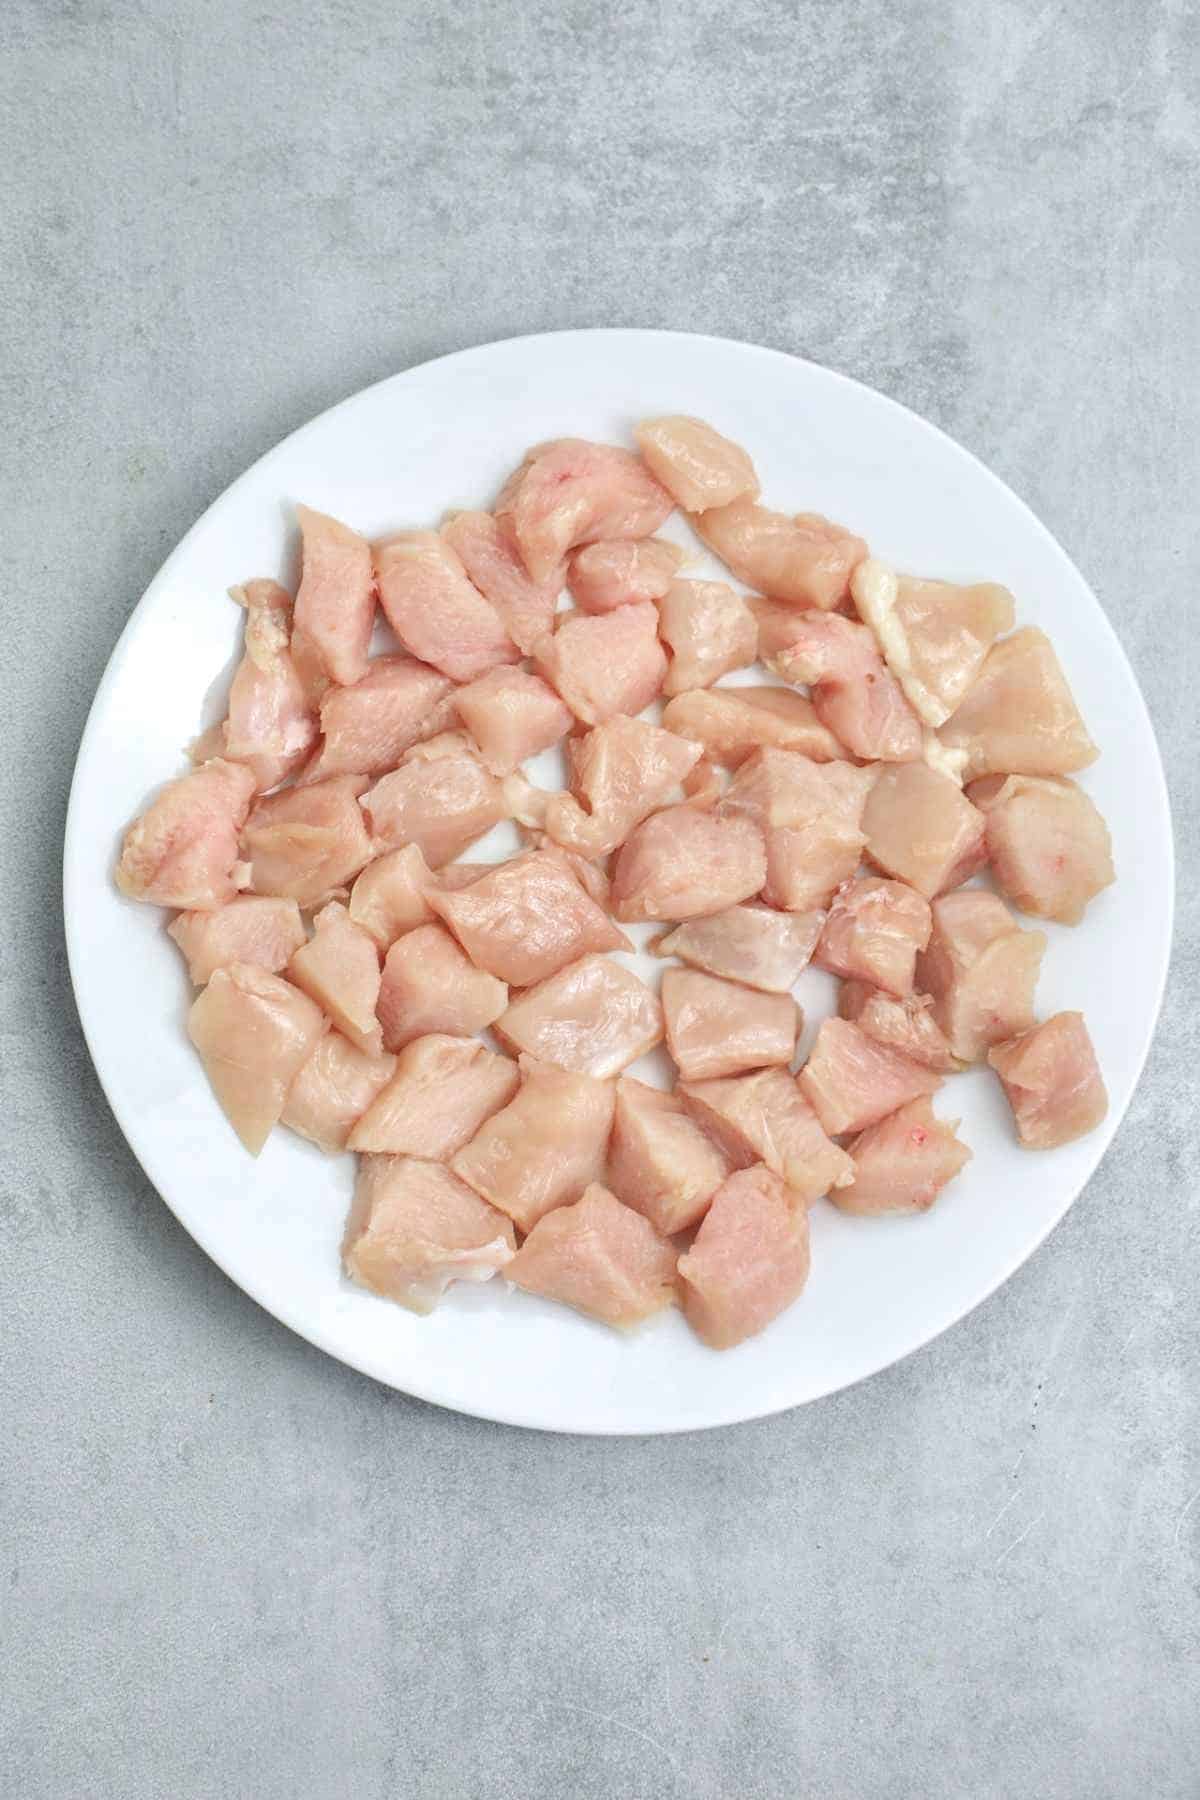 diced frozen chicken on a plate.